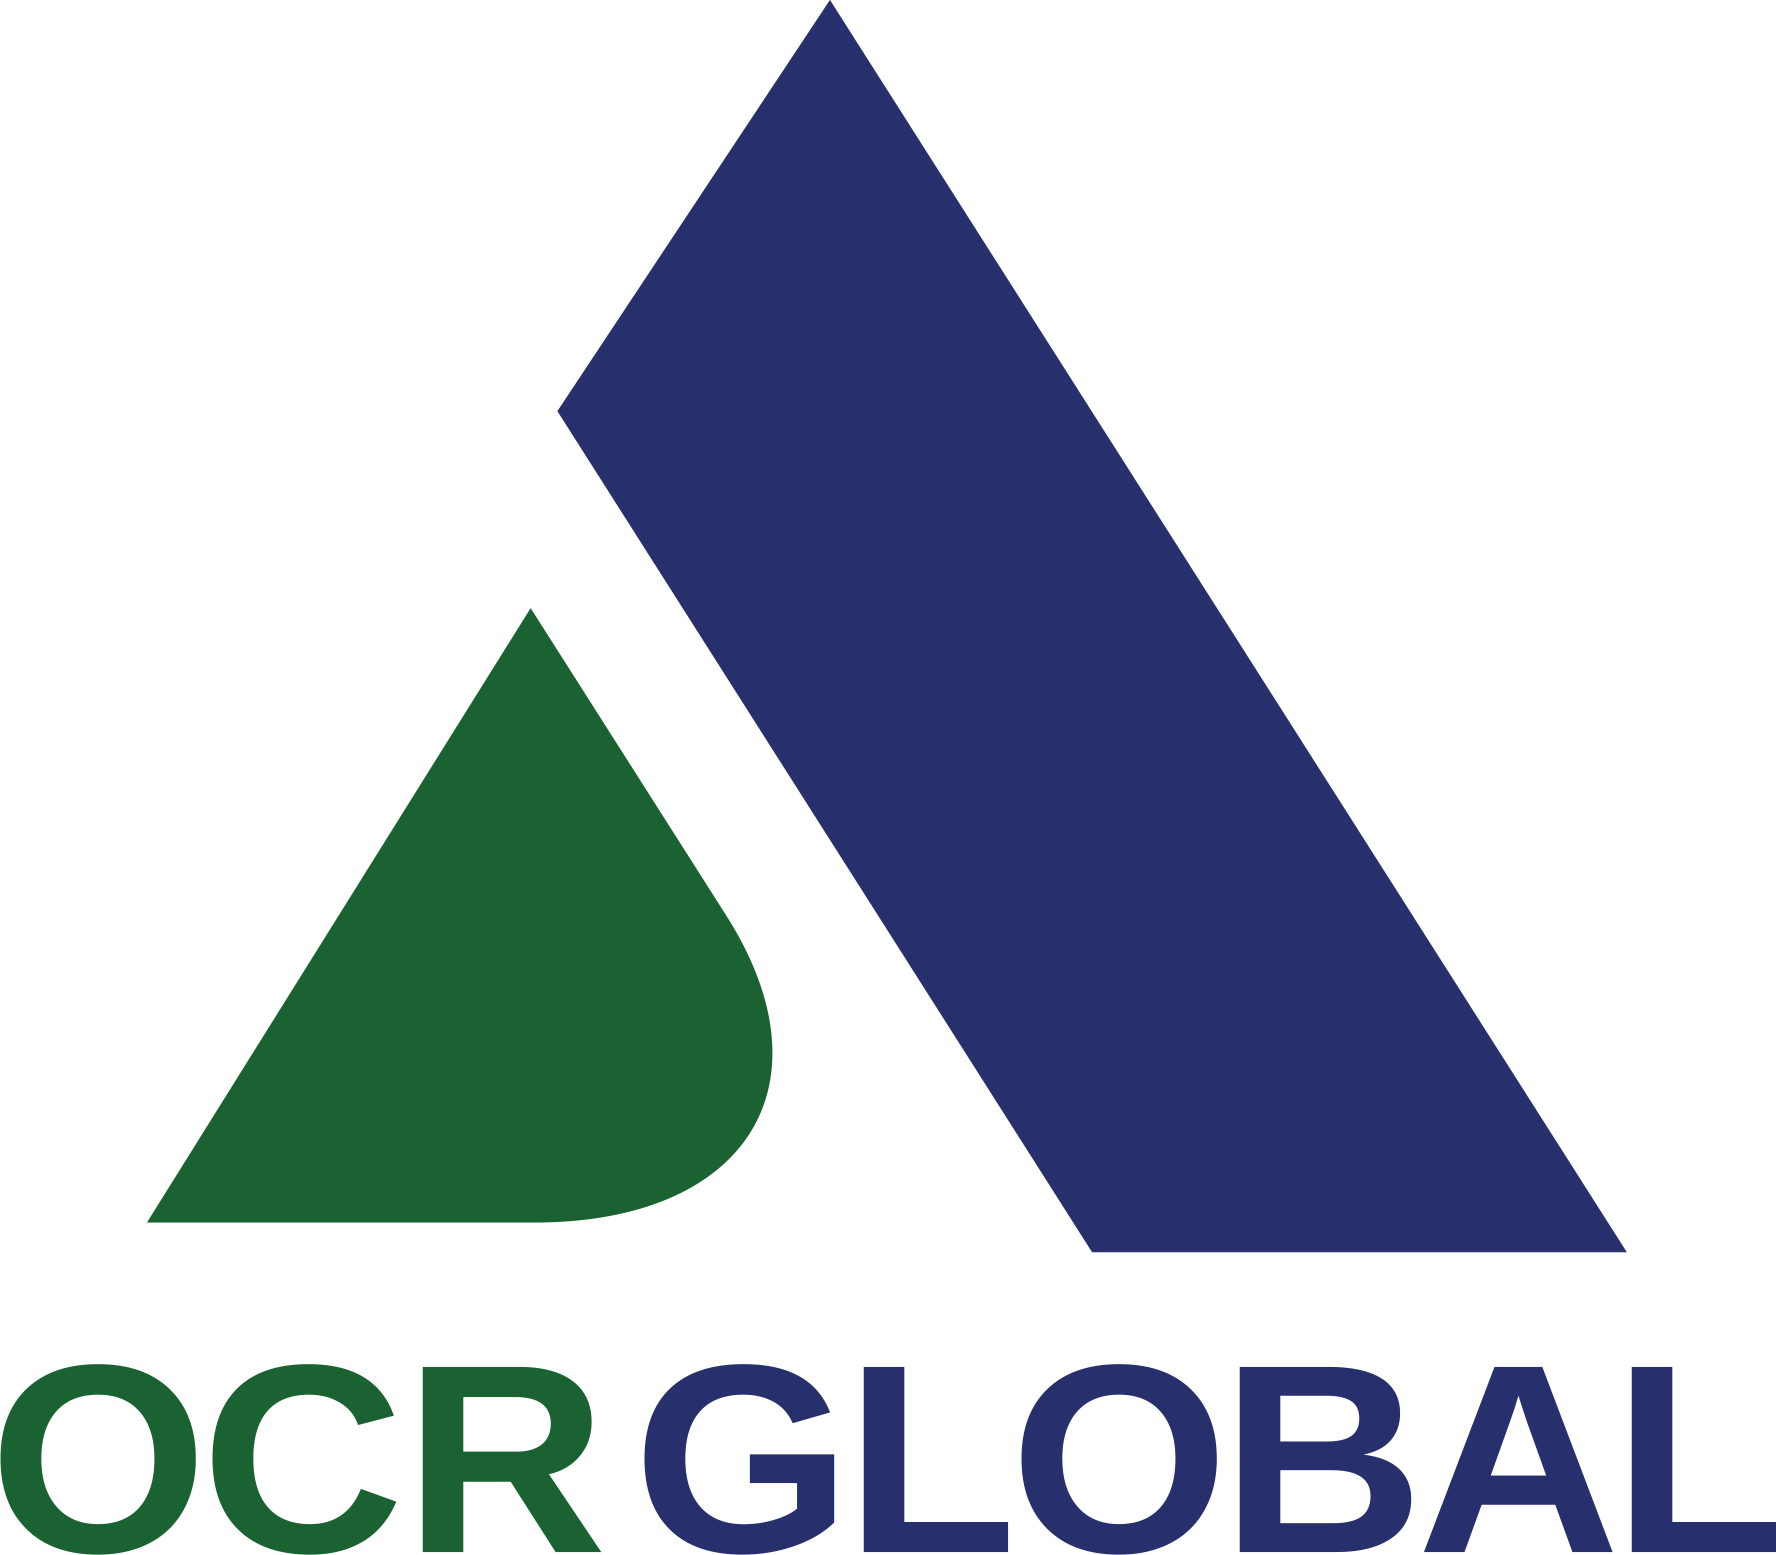 OCR Global